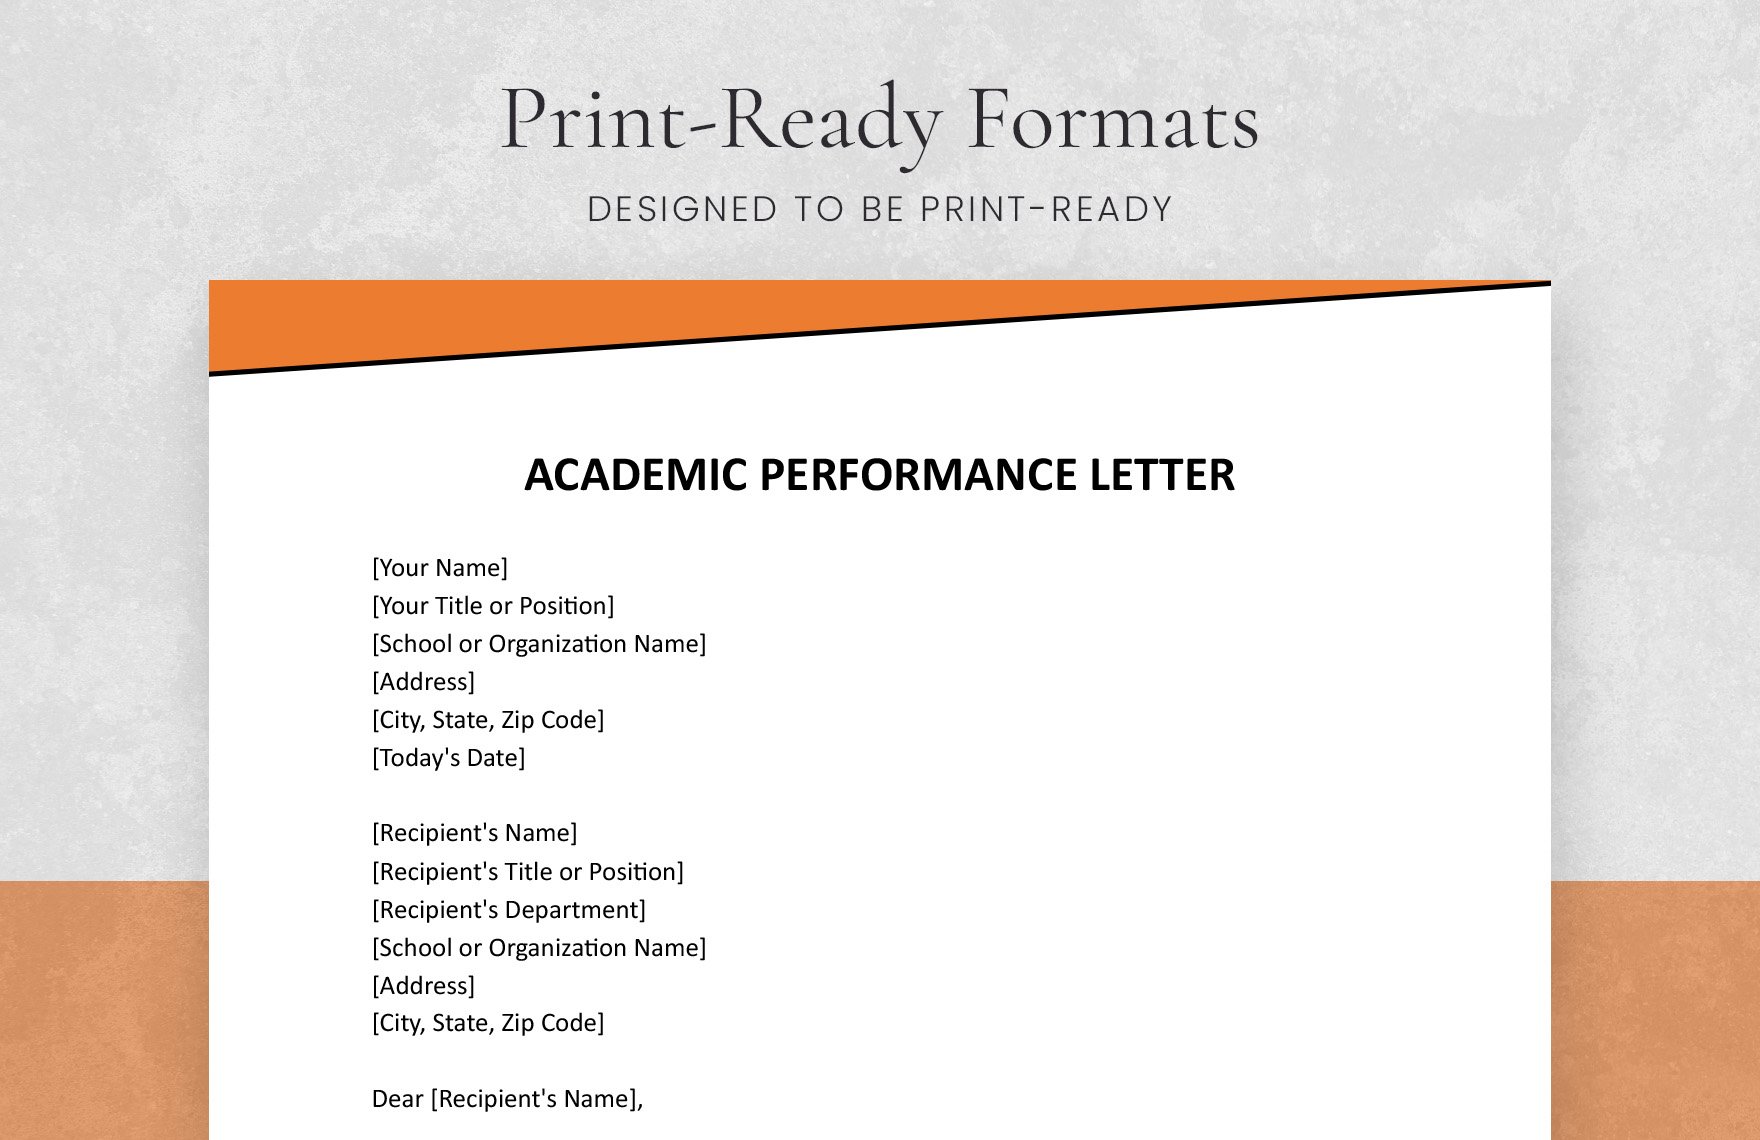 Academic Performance Letter